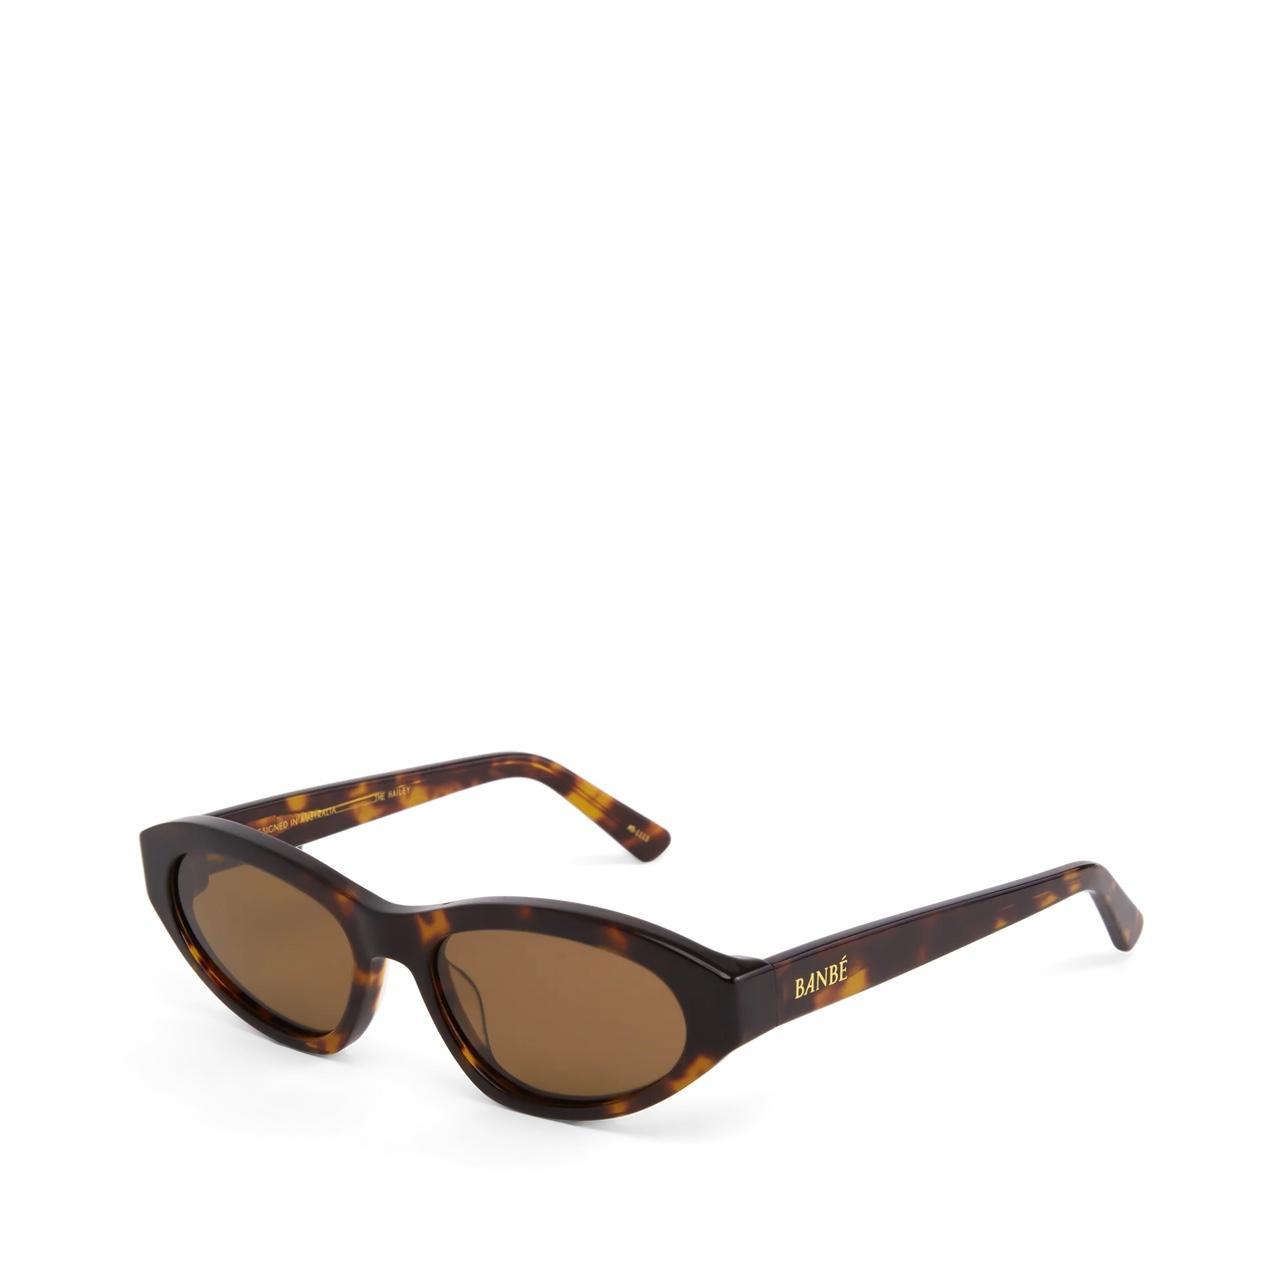 BANBÉ eyewear. HAILEY sunglasses in Havana brown.... - Depop